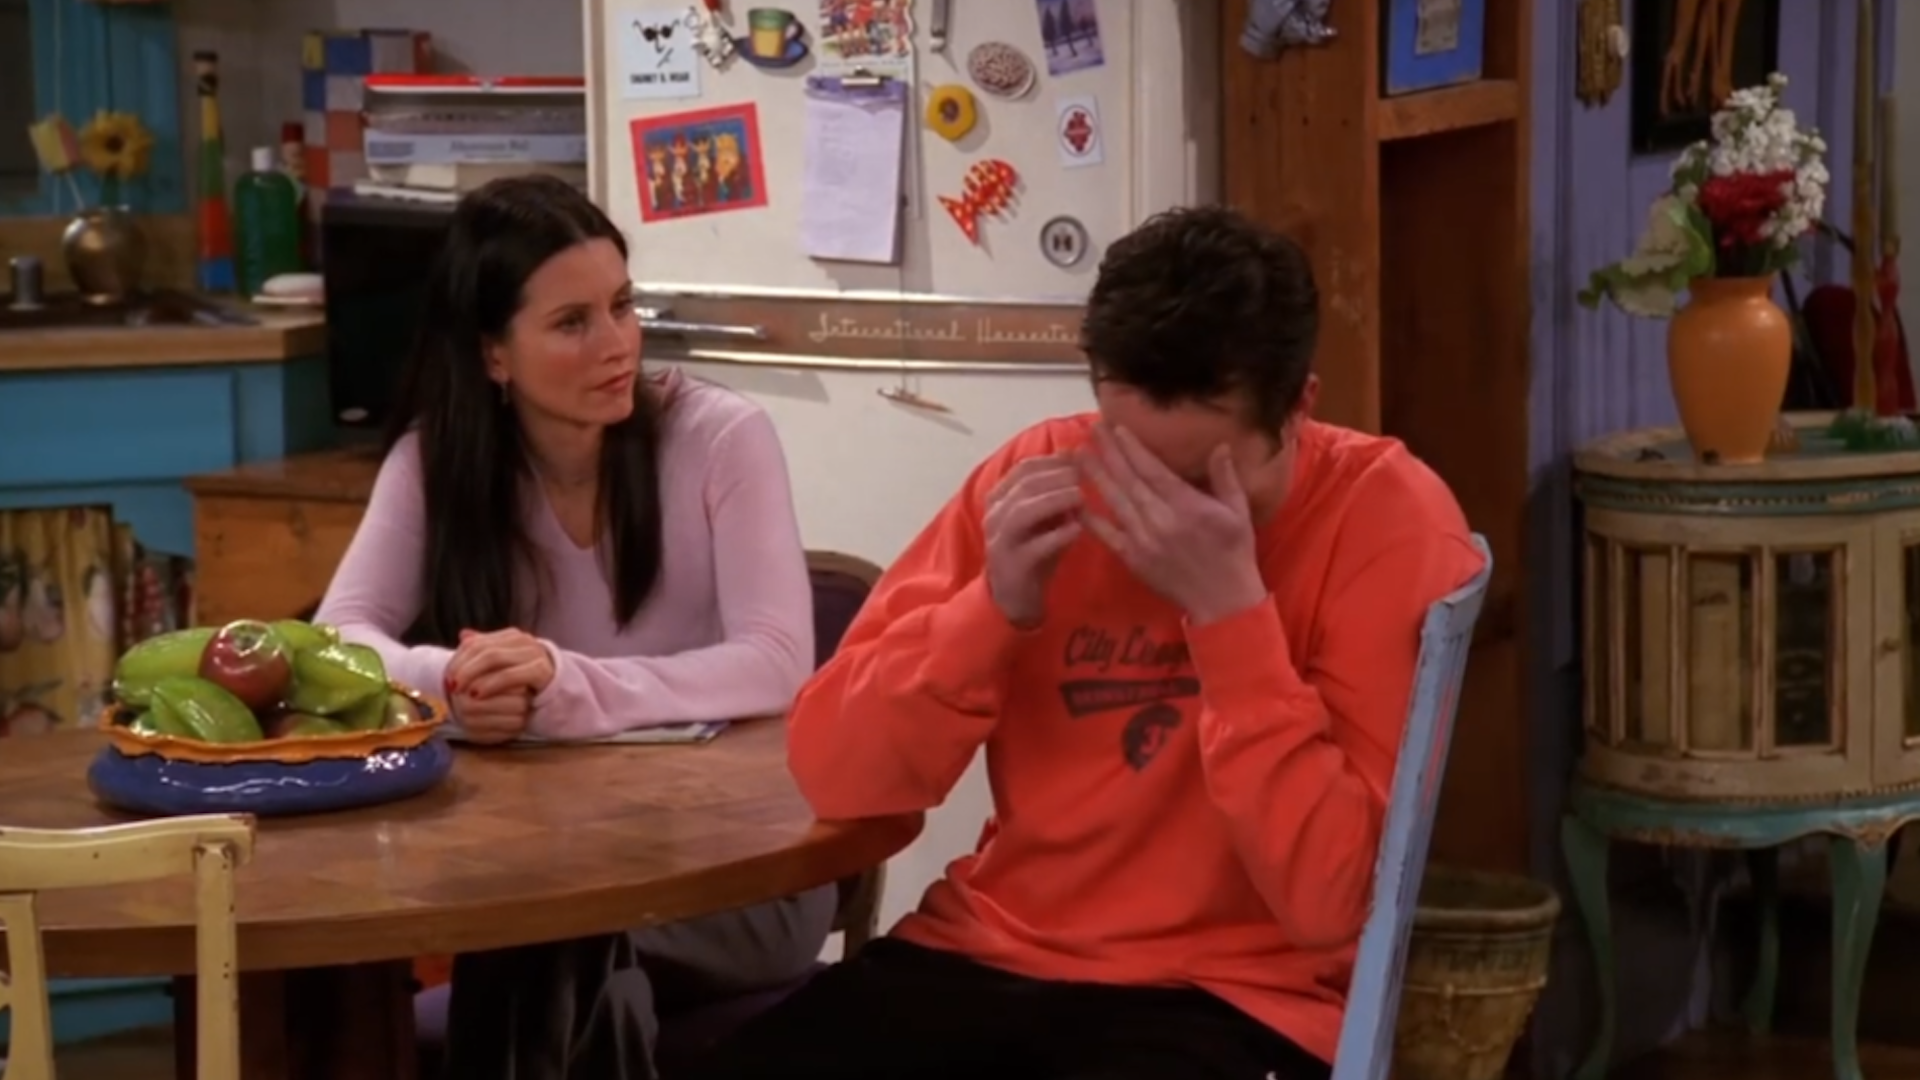 Chandler looks upset as Monica talks to him